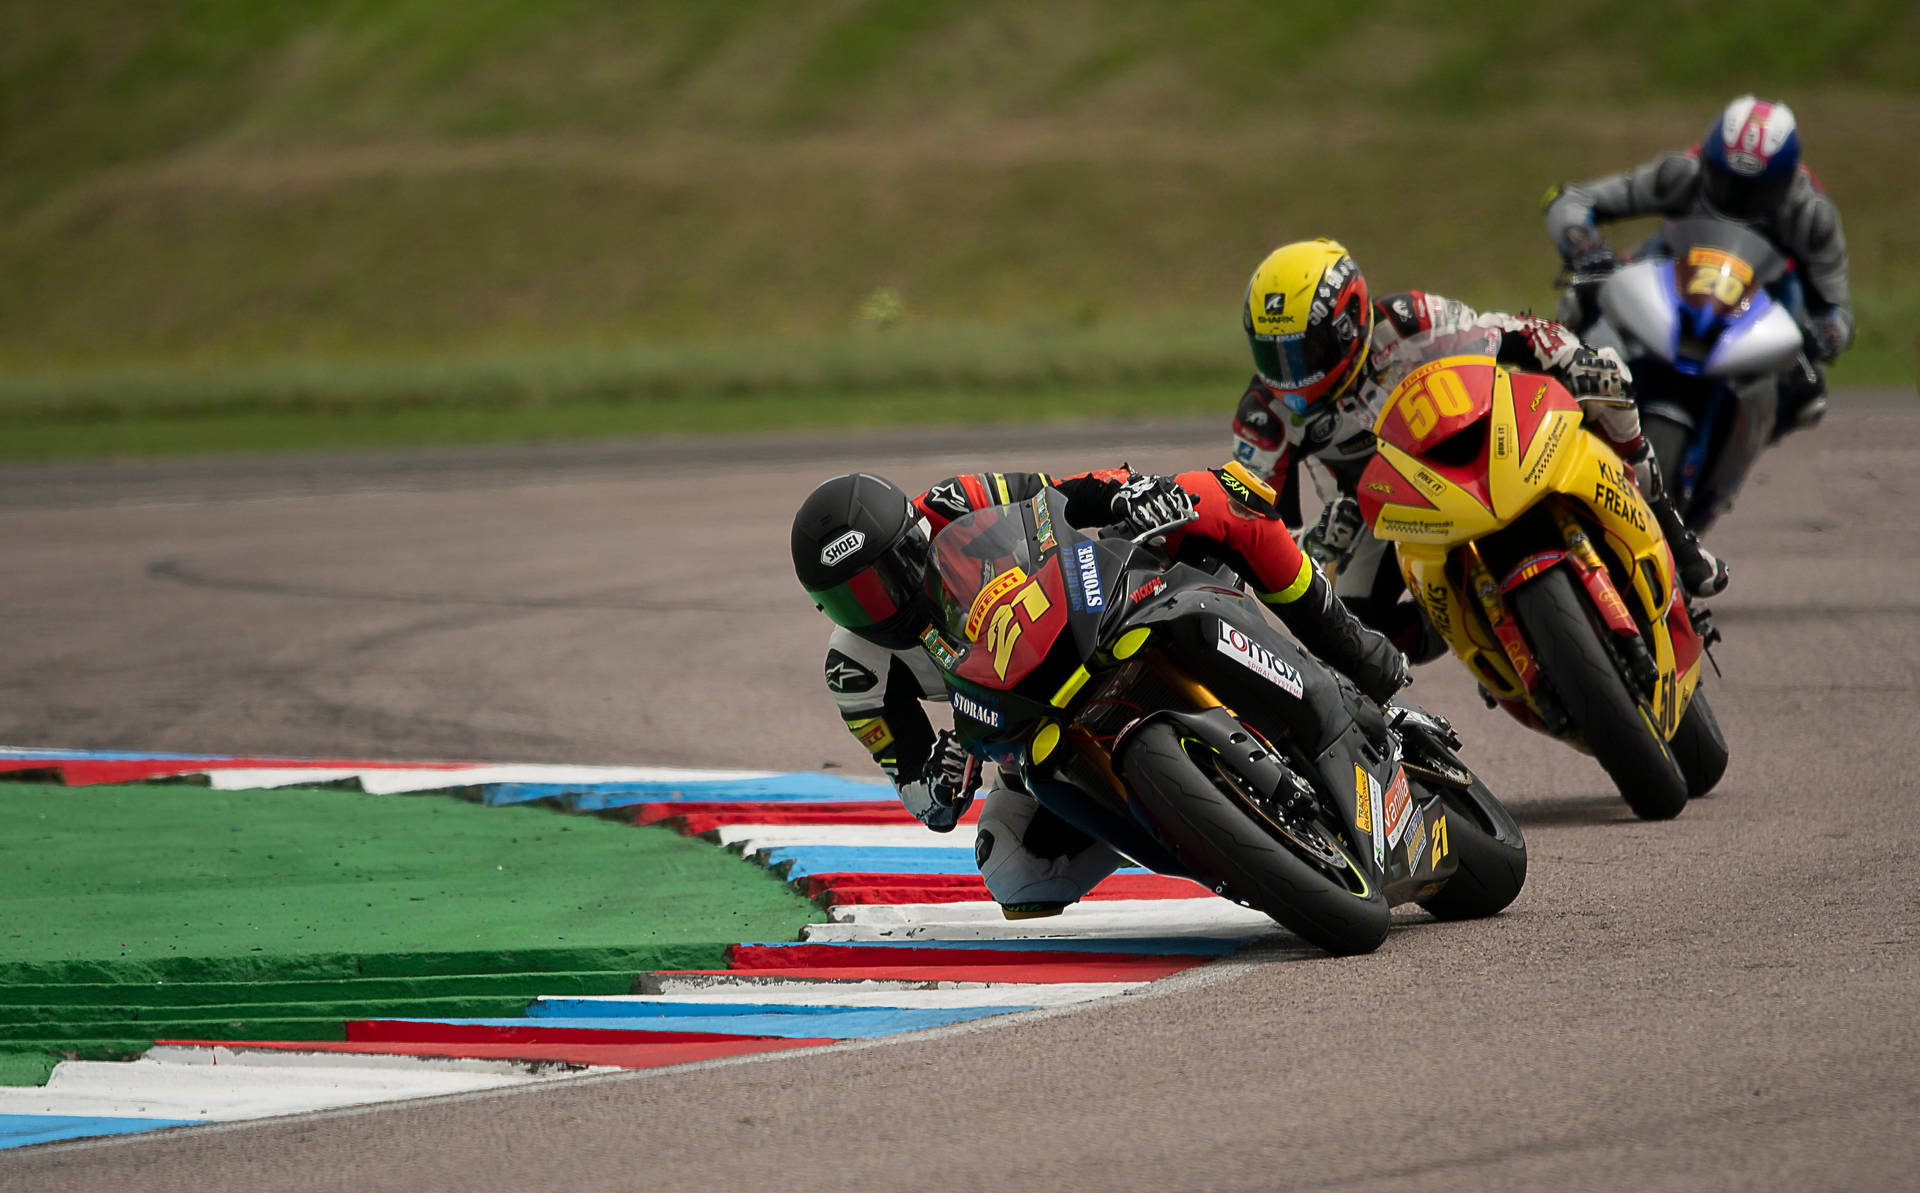 Caption: Dynamic Superbike Racing On Track Background